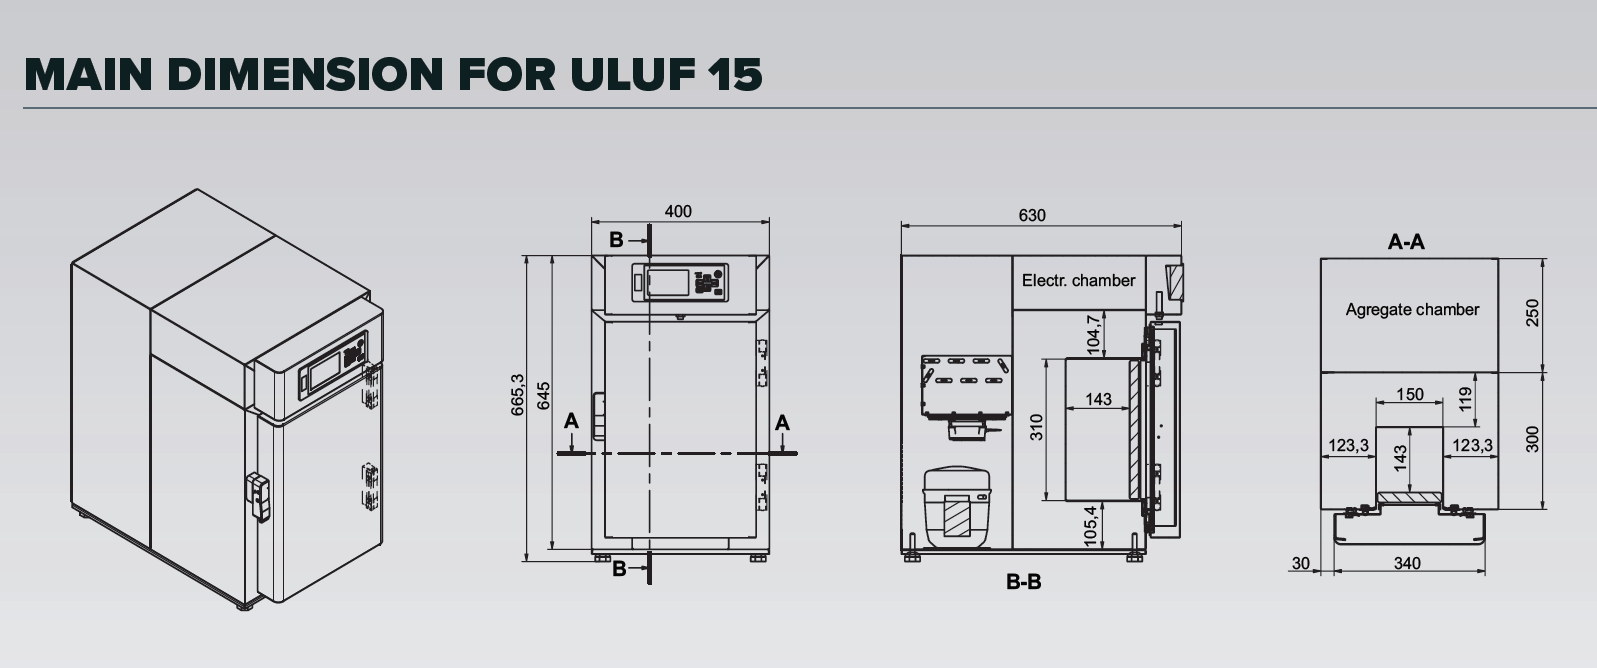 ULUF 15 Main Dimensions